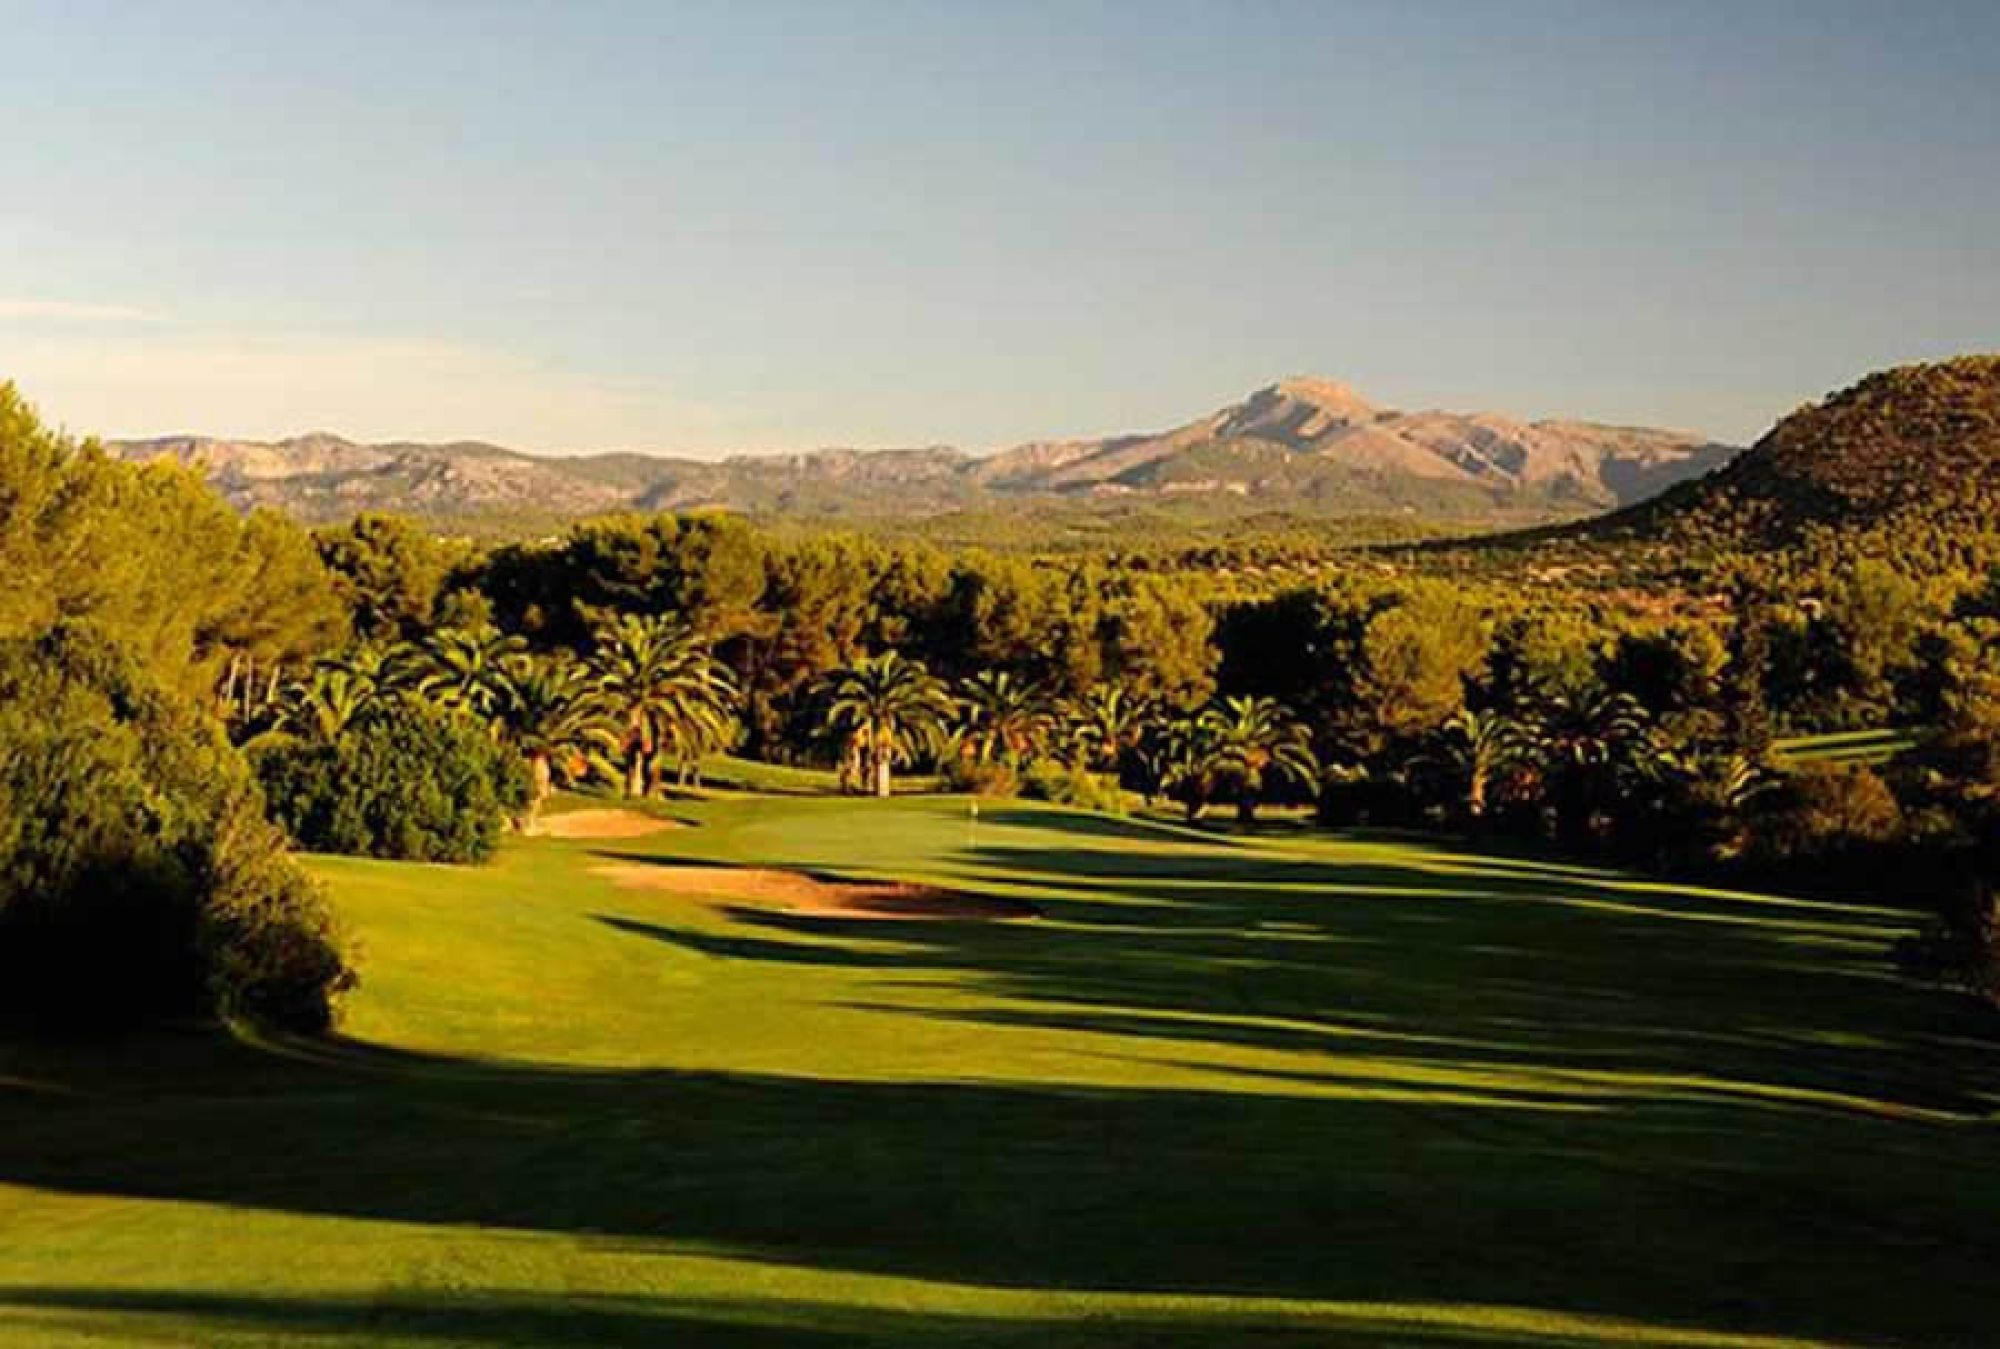 All The Poniente Golf Course's picturesque golf course in sensational Mallorca.